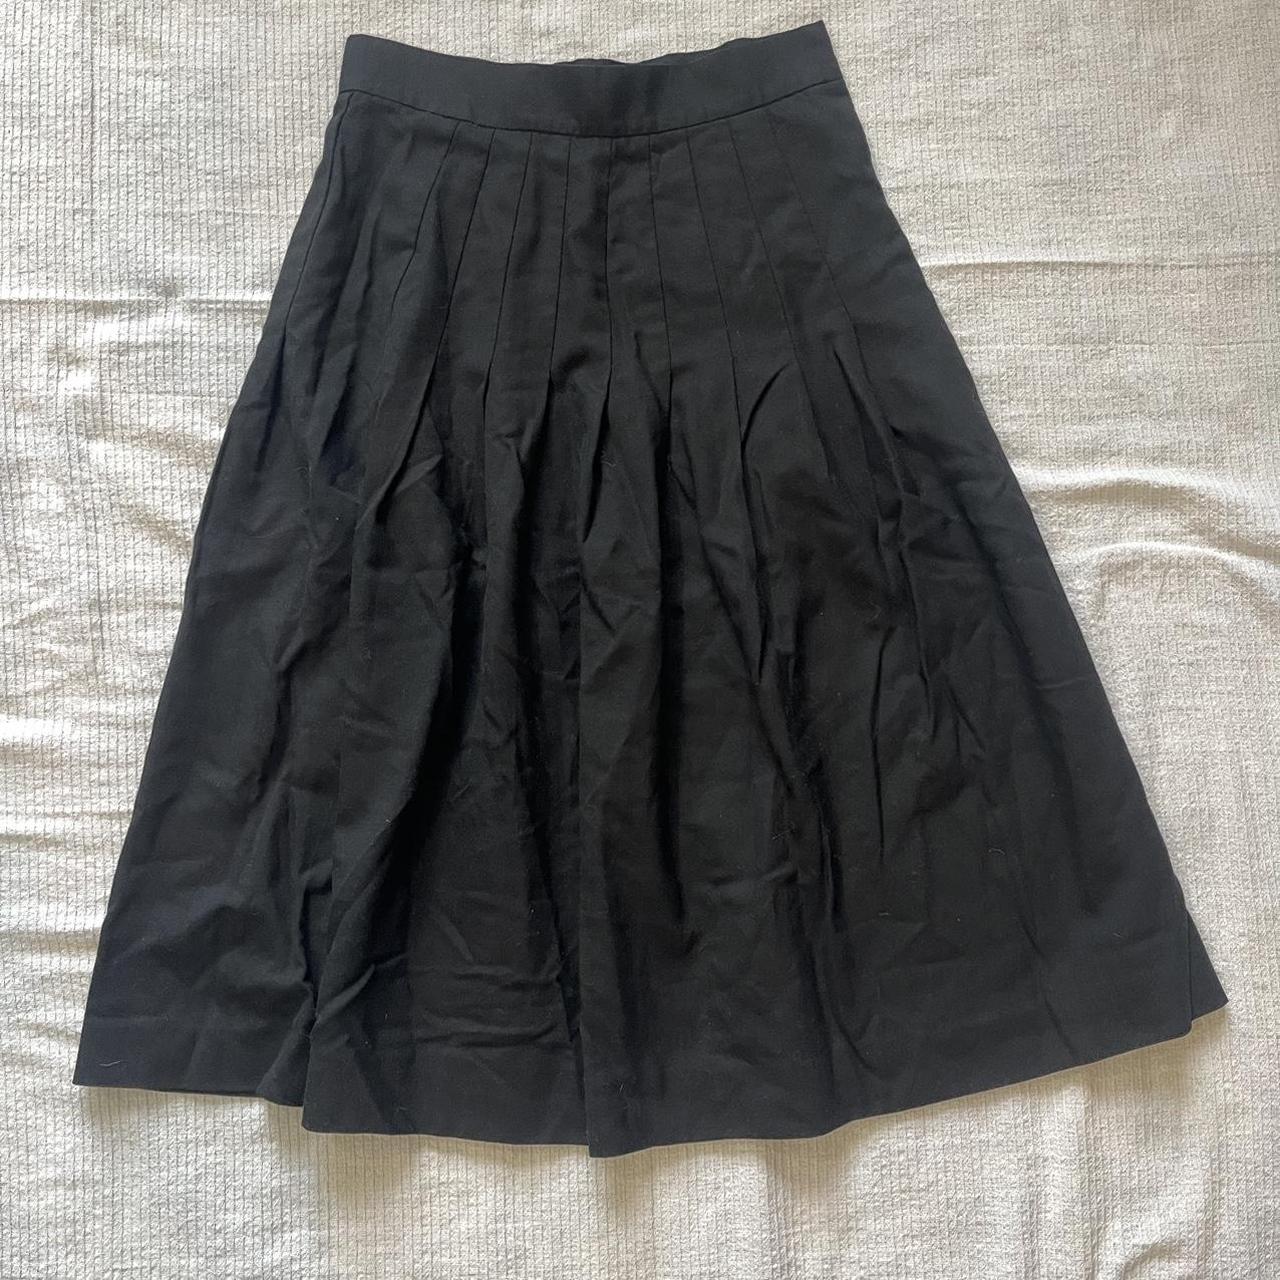 Size 8 Talbots black pleated skirt. Such a fun... - Depop